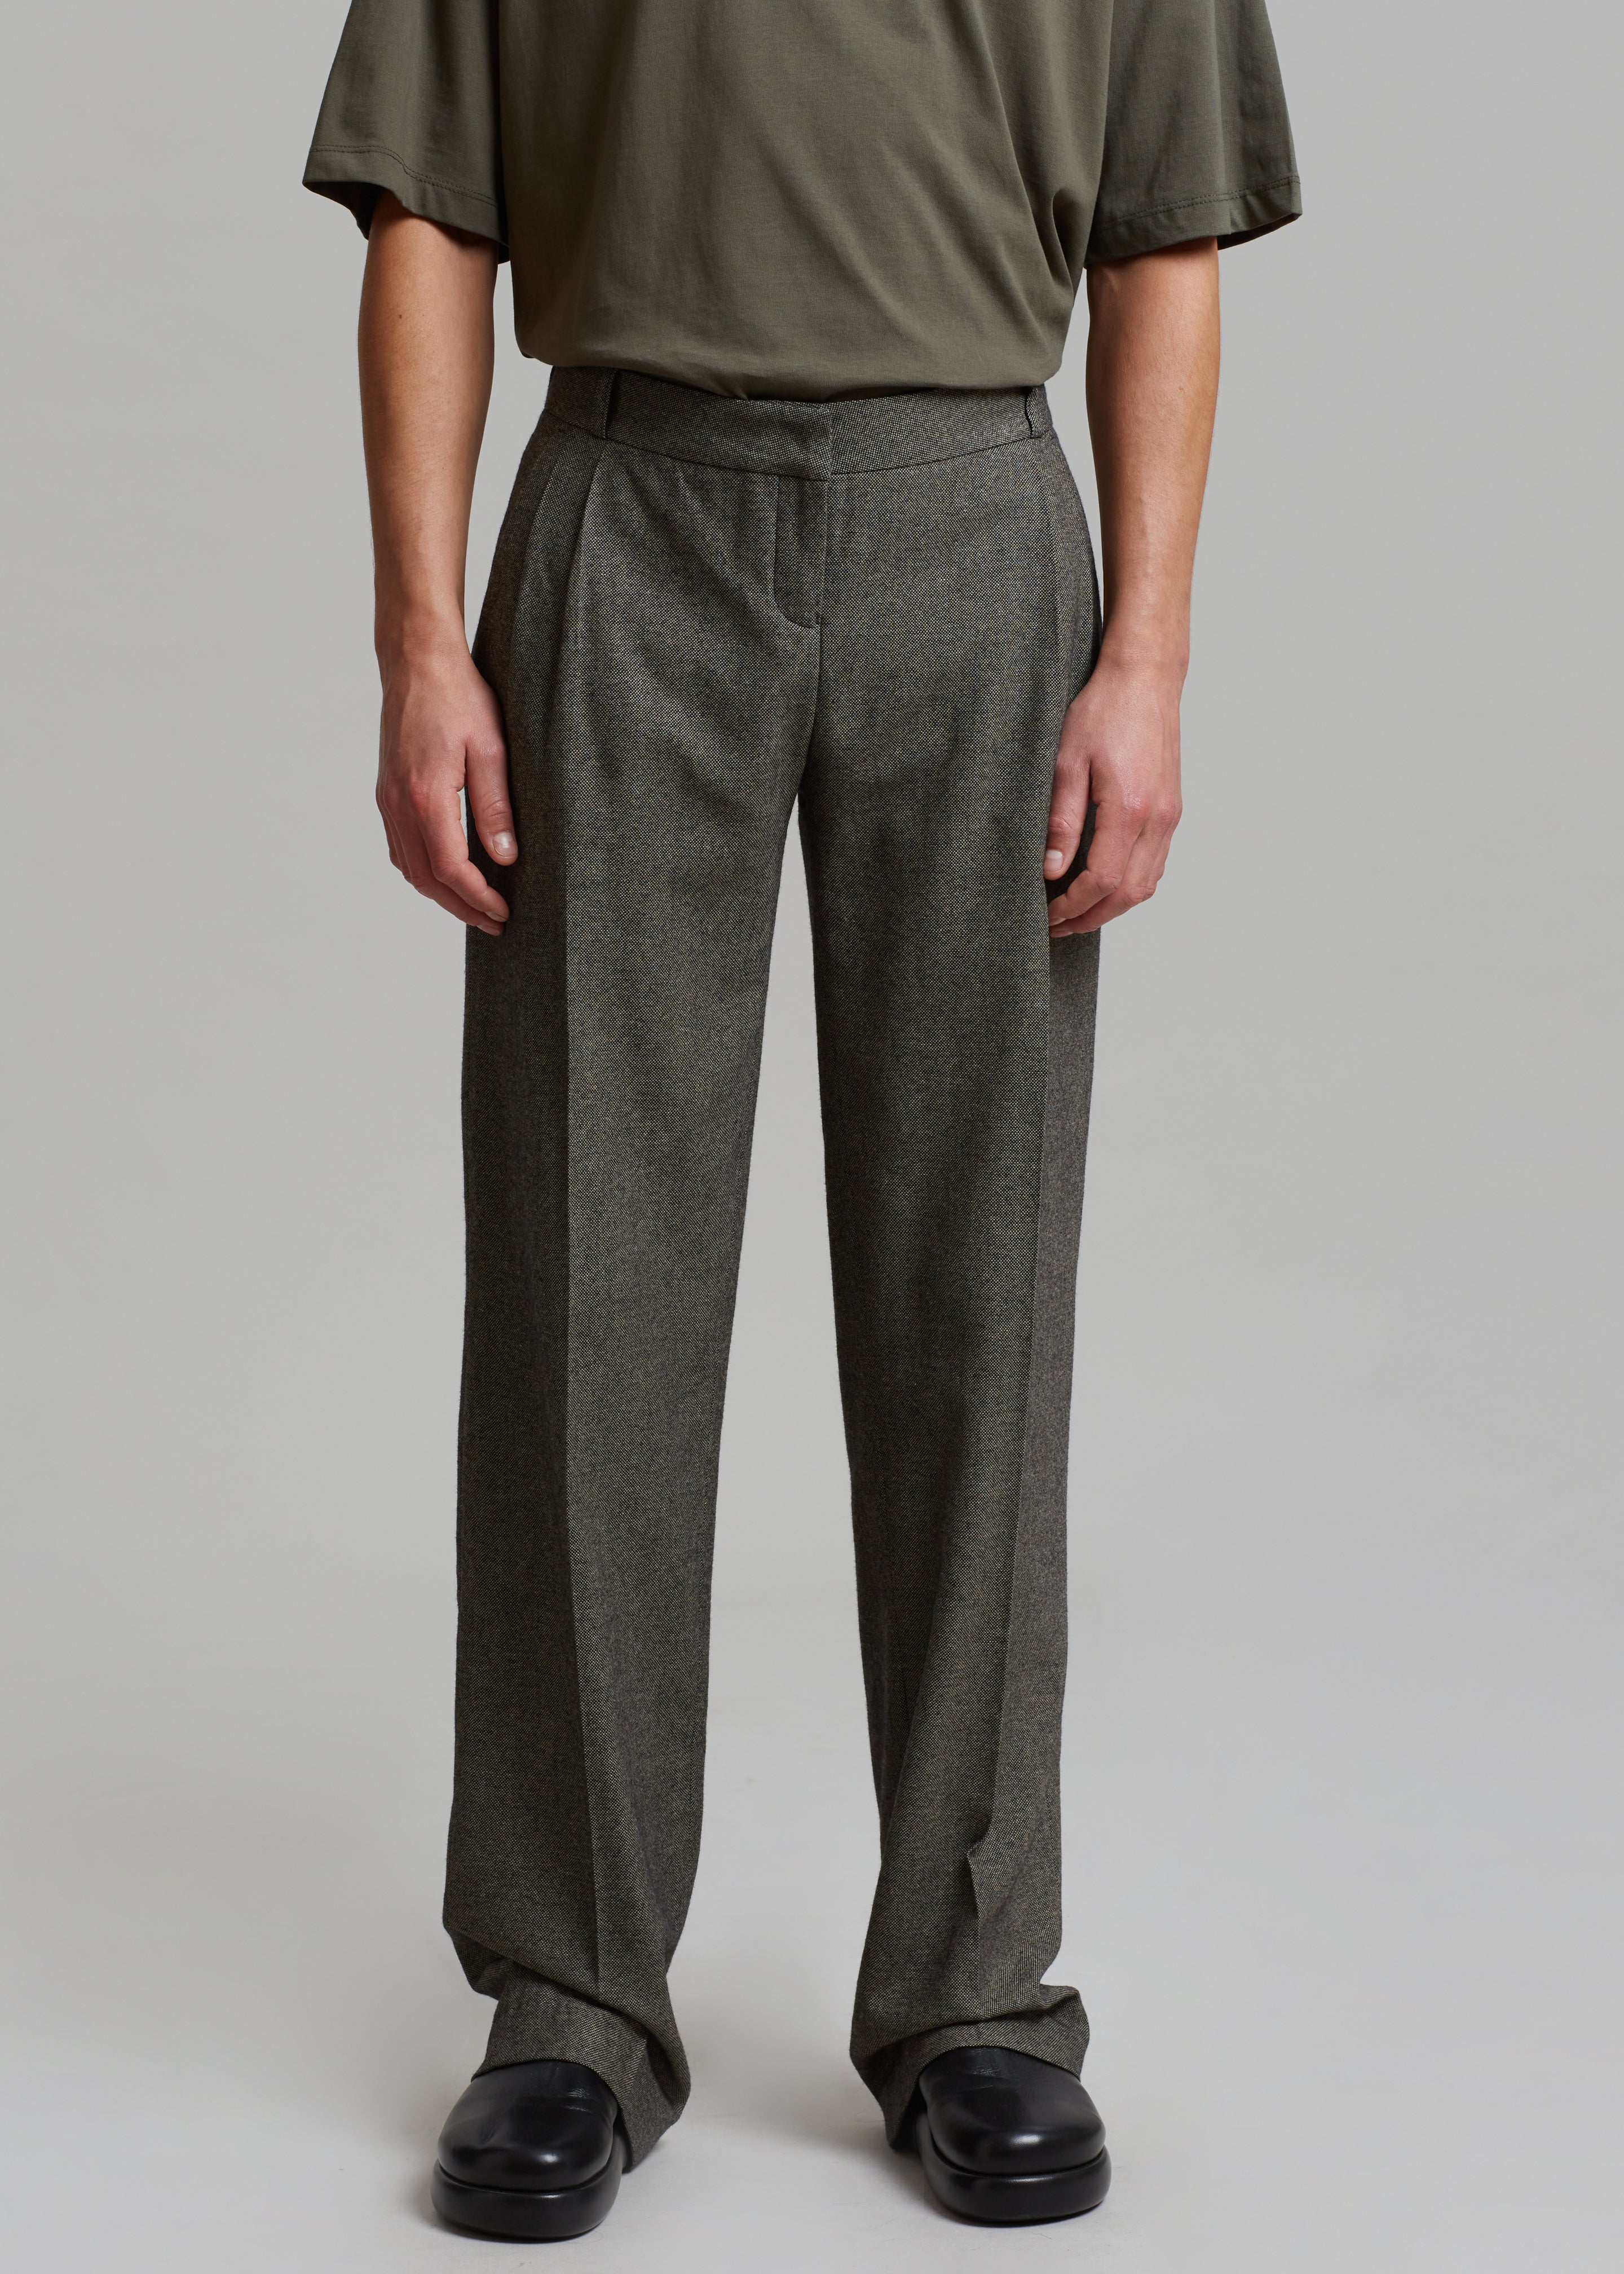 Coperni Low-rise Loose Tailored Trousers - Dark Moss - 2